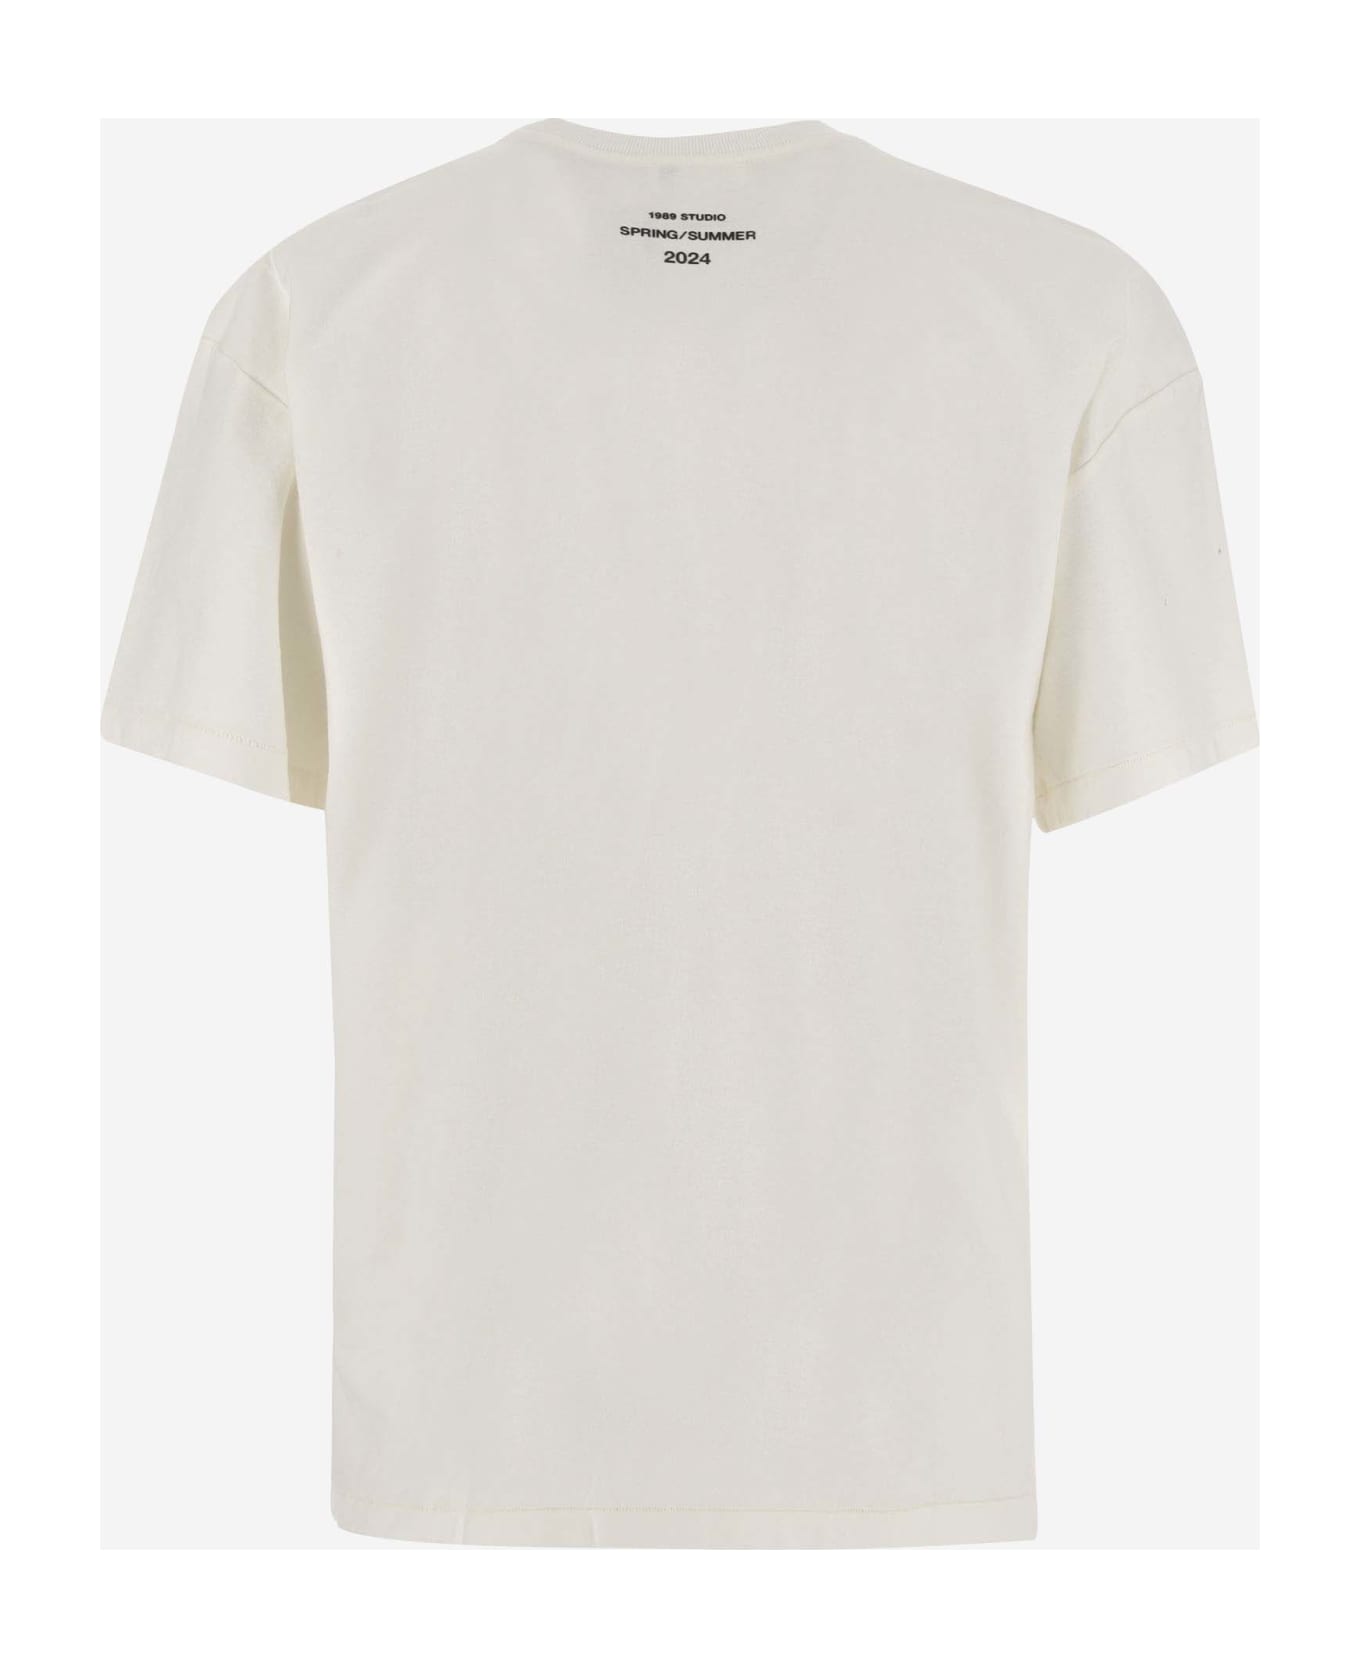 1989 Studio Cotton T-shirt With Graphic Print - VINTAGE WHITE